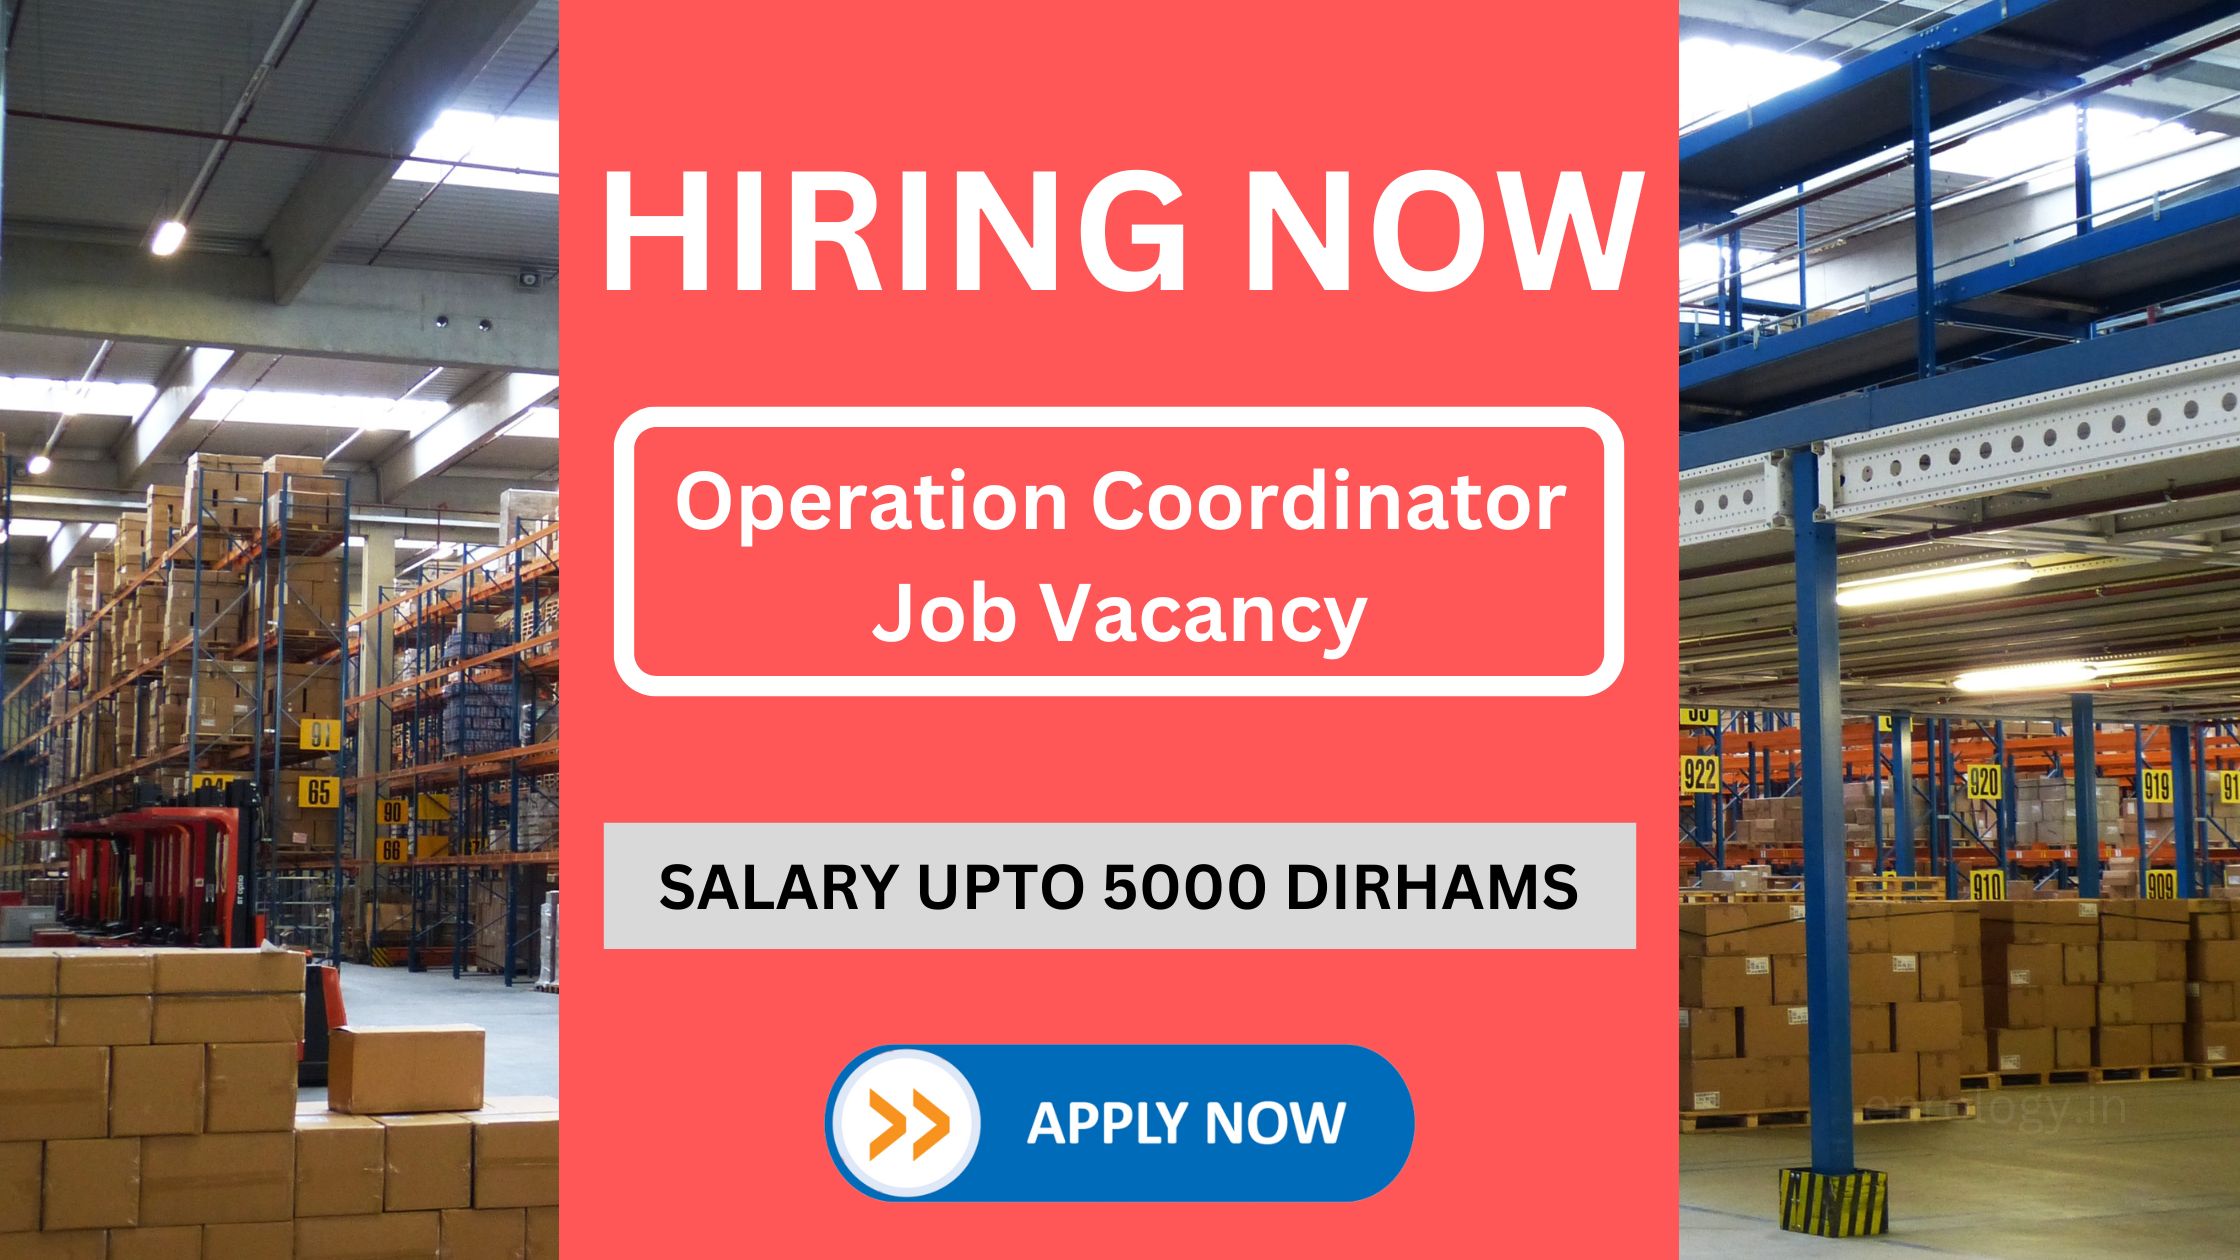 Operation Coordinator in Logistics Industry with Starting Salary Upto 5000 Dirhams